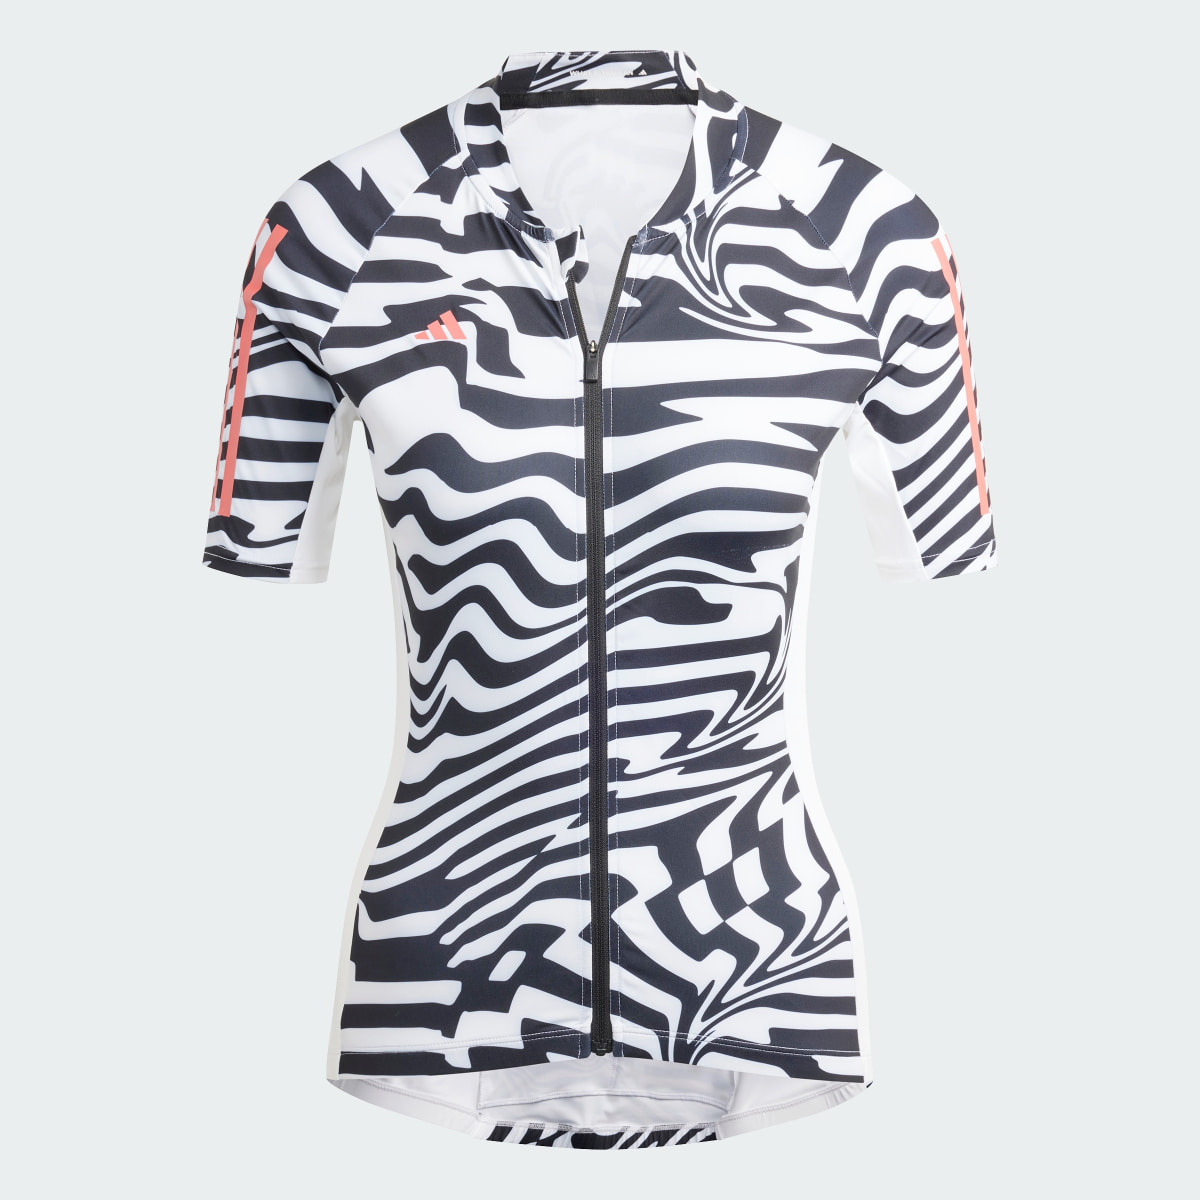 Adidas Essentials 3-Stripes Fast Zebra Cycling Jersey. 4